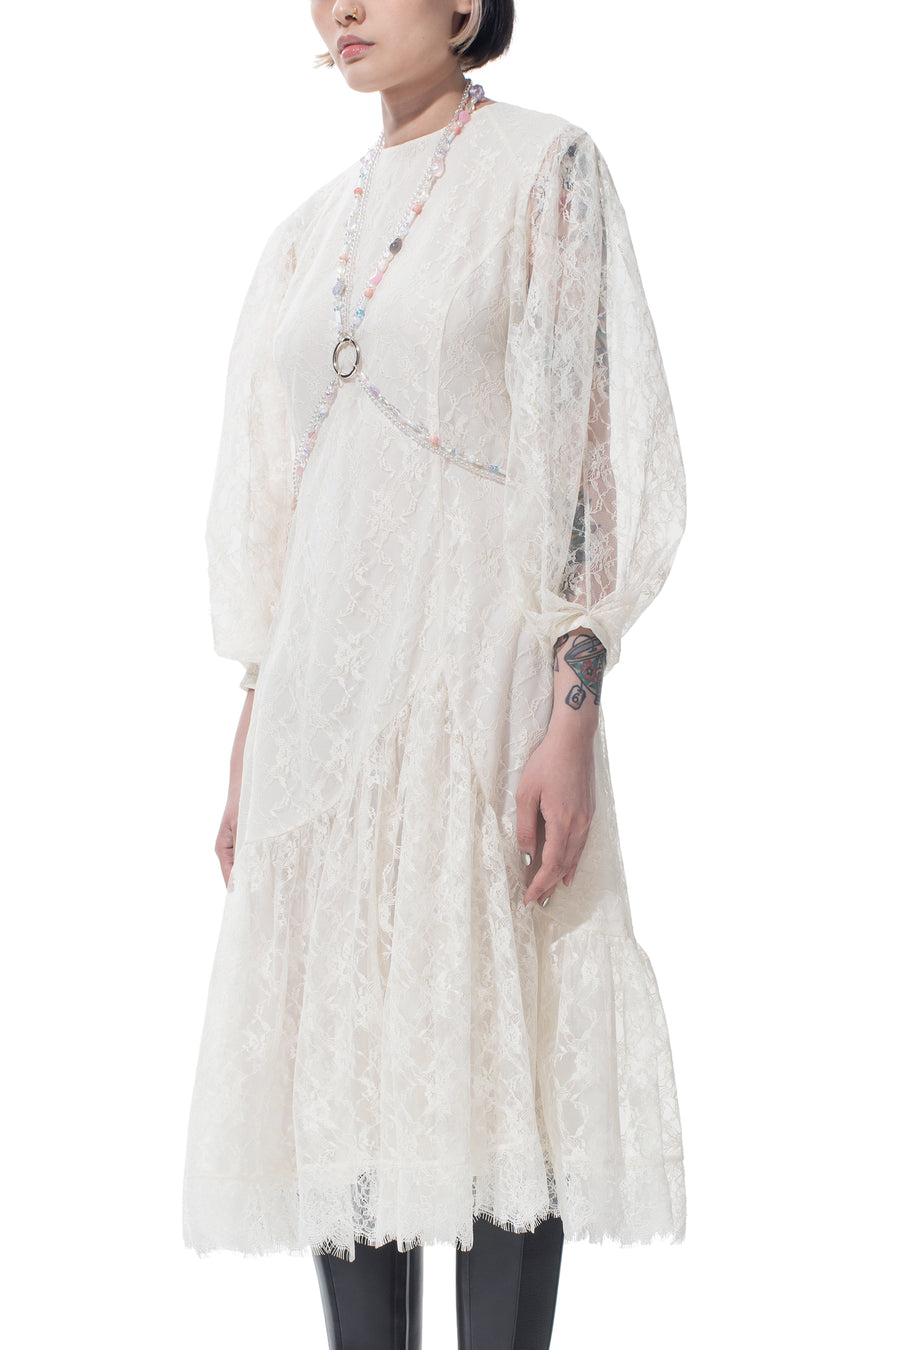 White Puff Sleeve lace dress